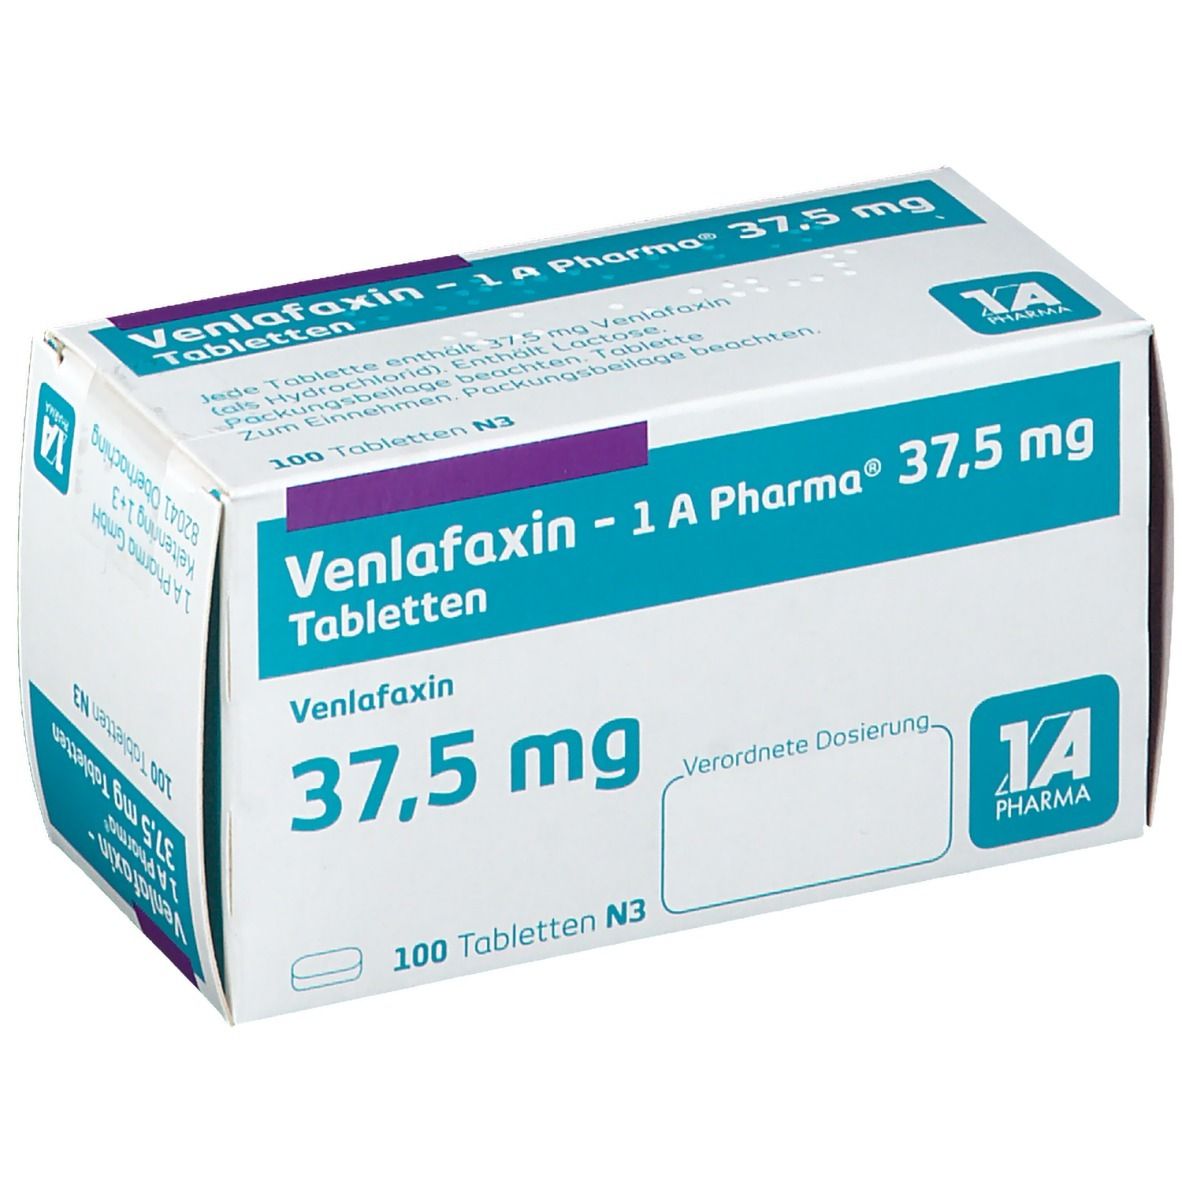 Venlafaxin 1A Pharma®37.5Mg